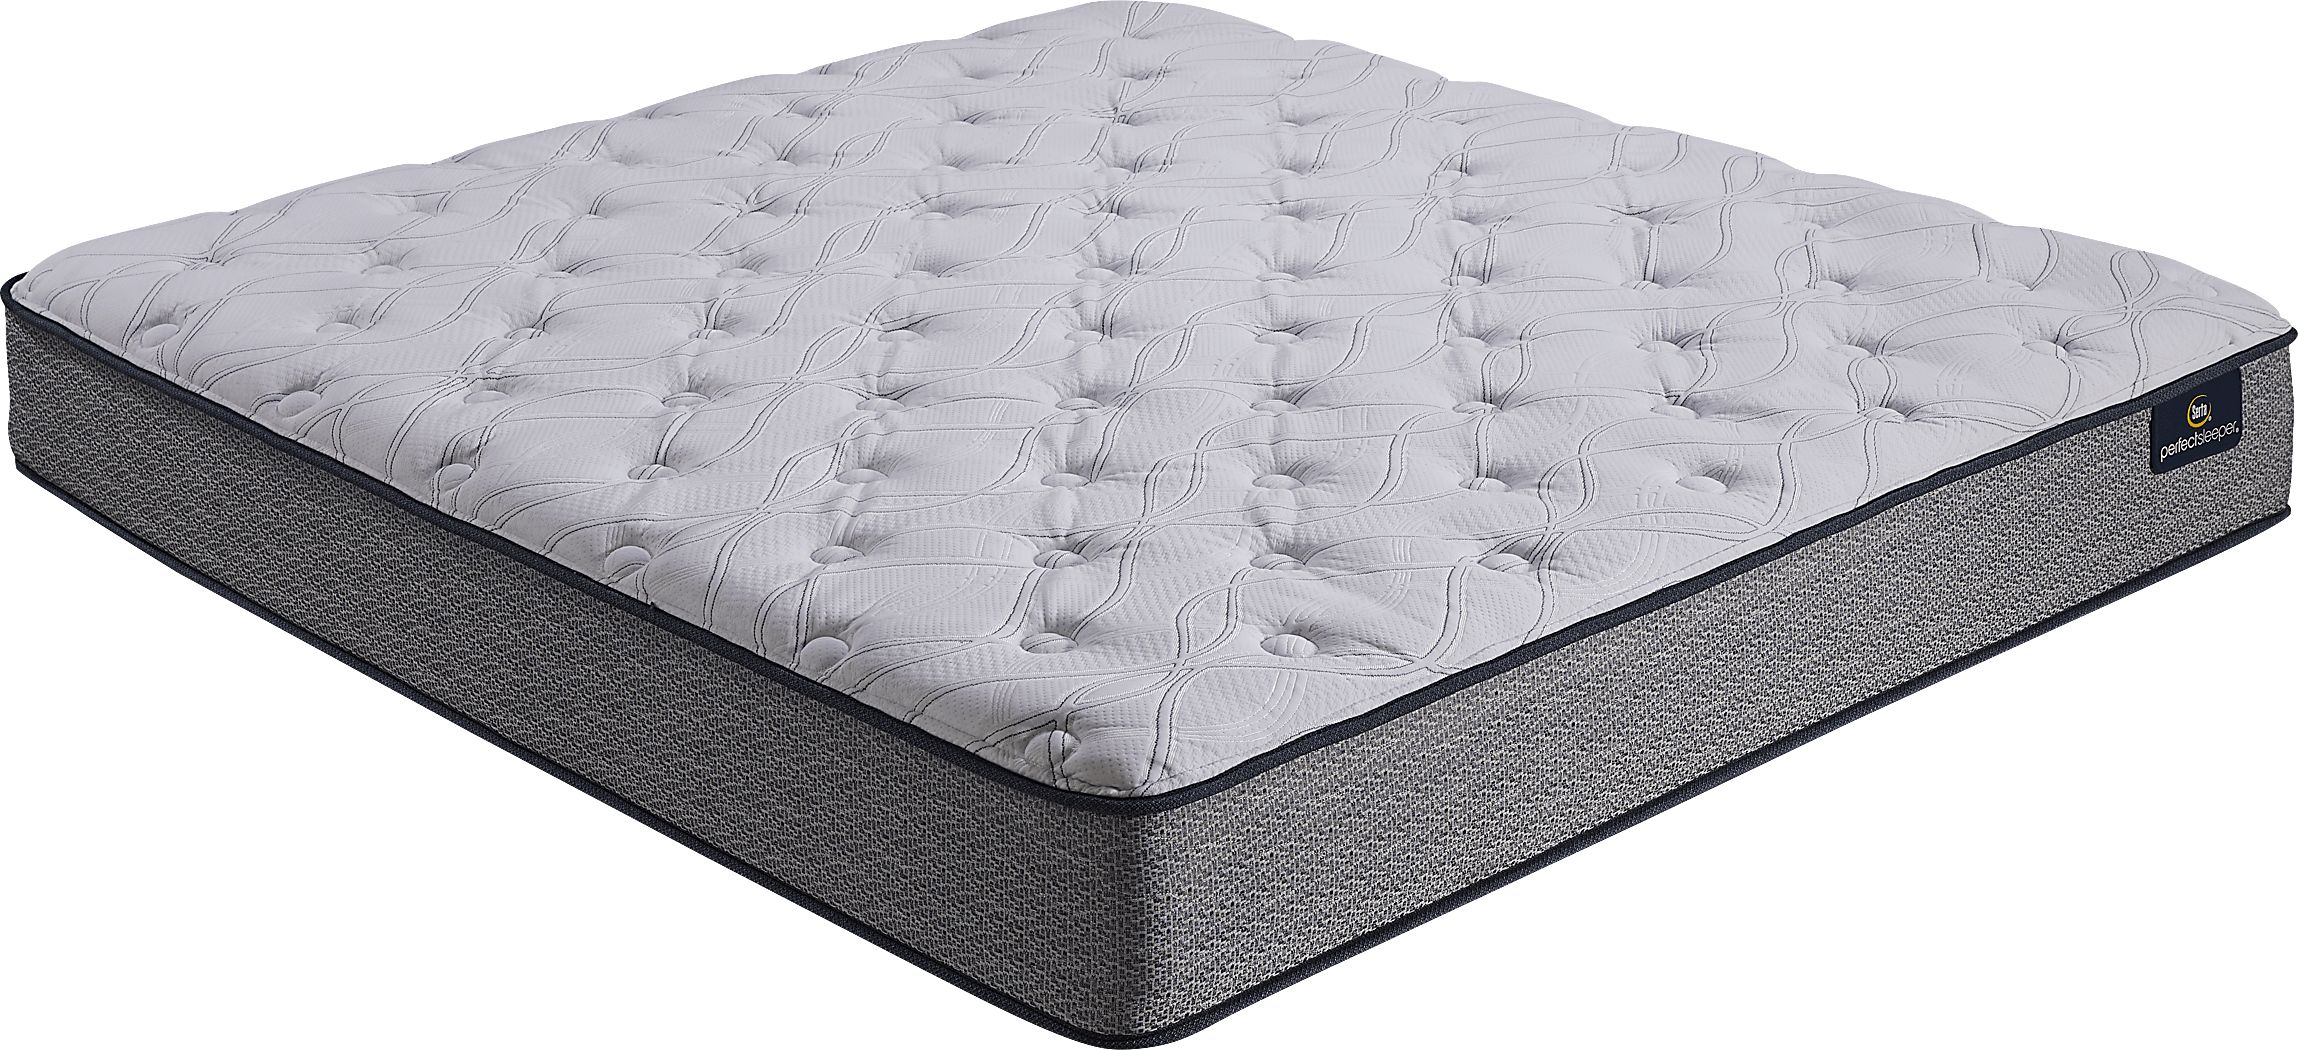 serta perfect sleeper california king mattress